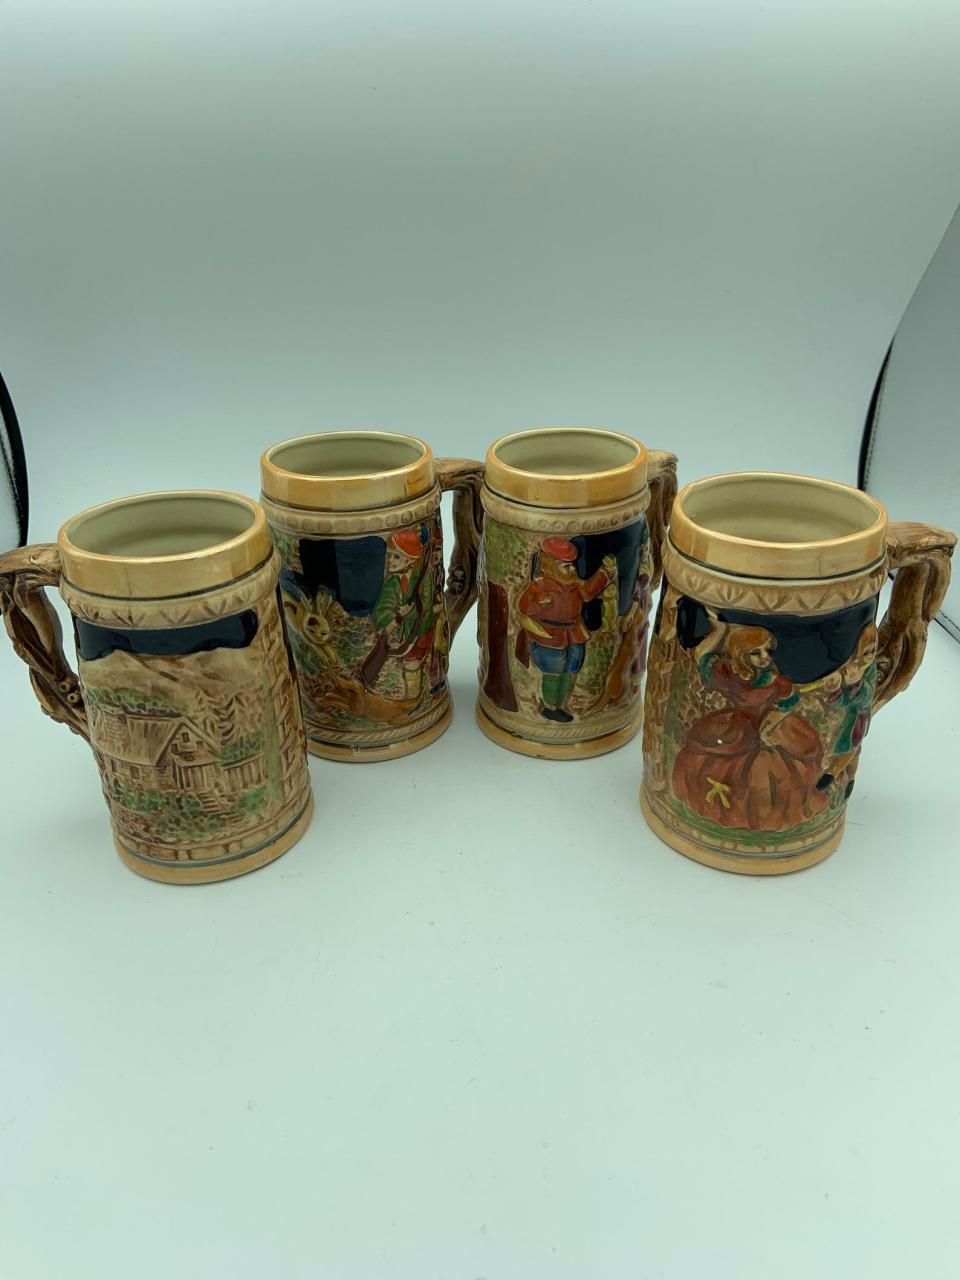 Set Of Four Vintage Ceramic Beer Steins Tankards With Embossed German Village Scenes And Tree Branch Handles Made In Japan